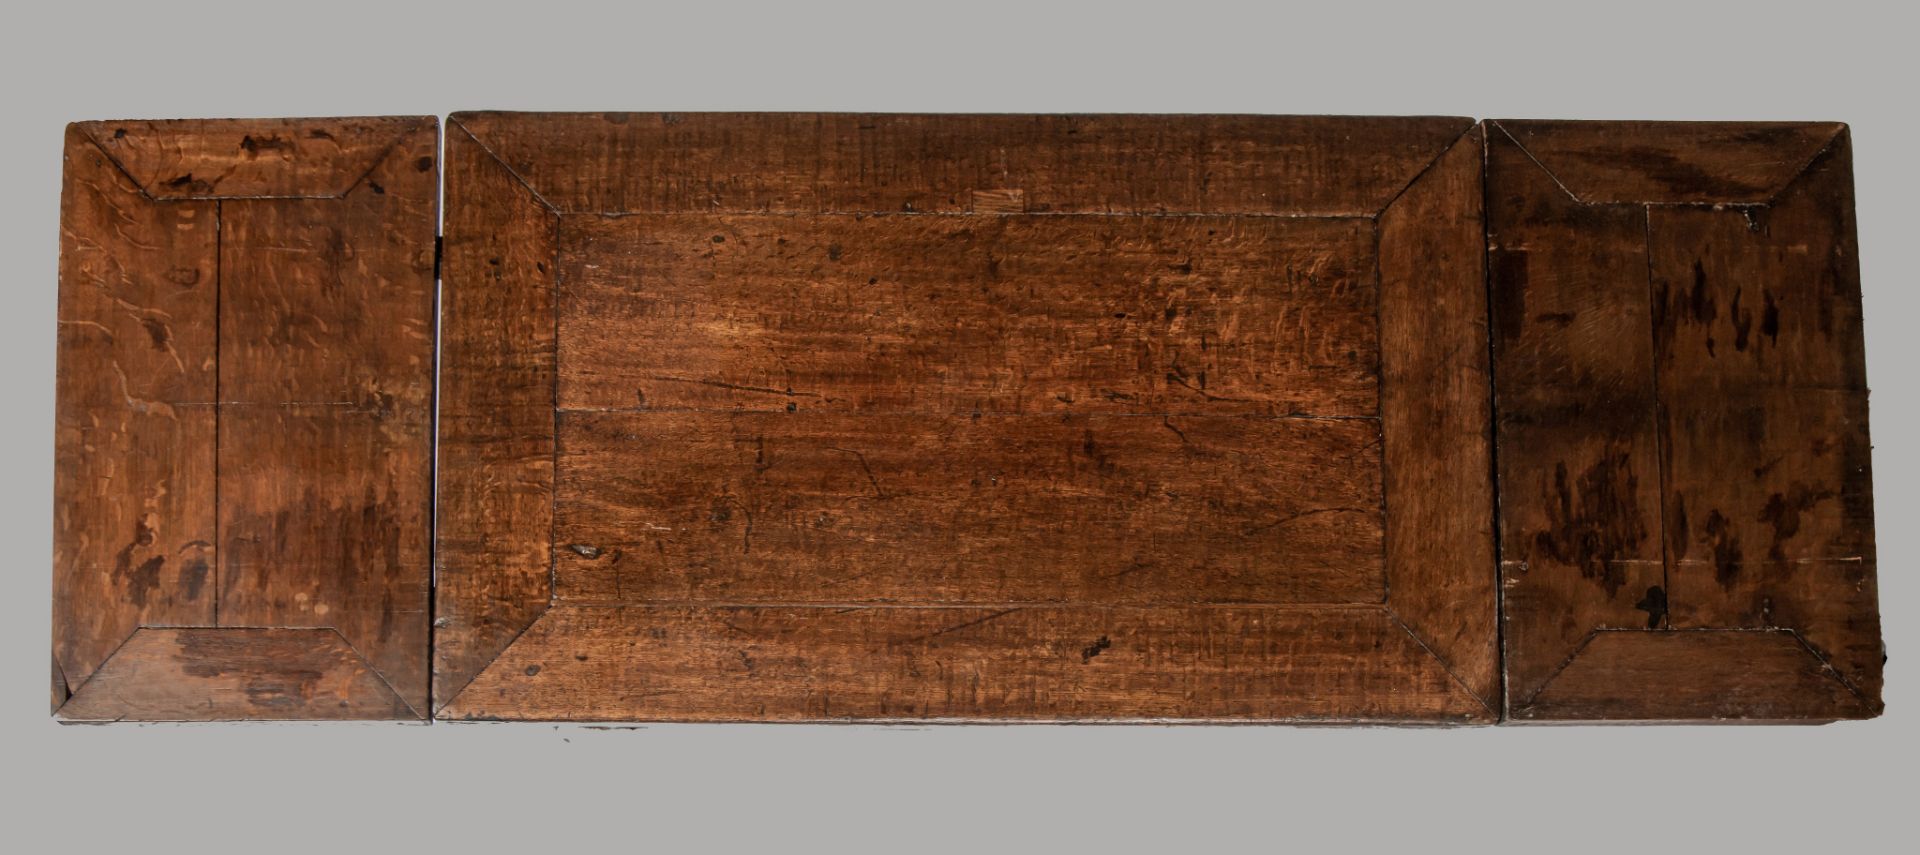 An impressive Flemish or Dutch oak table, early 17thC, H 80 - W 146 - 252 - D 85 cm - Image 7 of 8